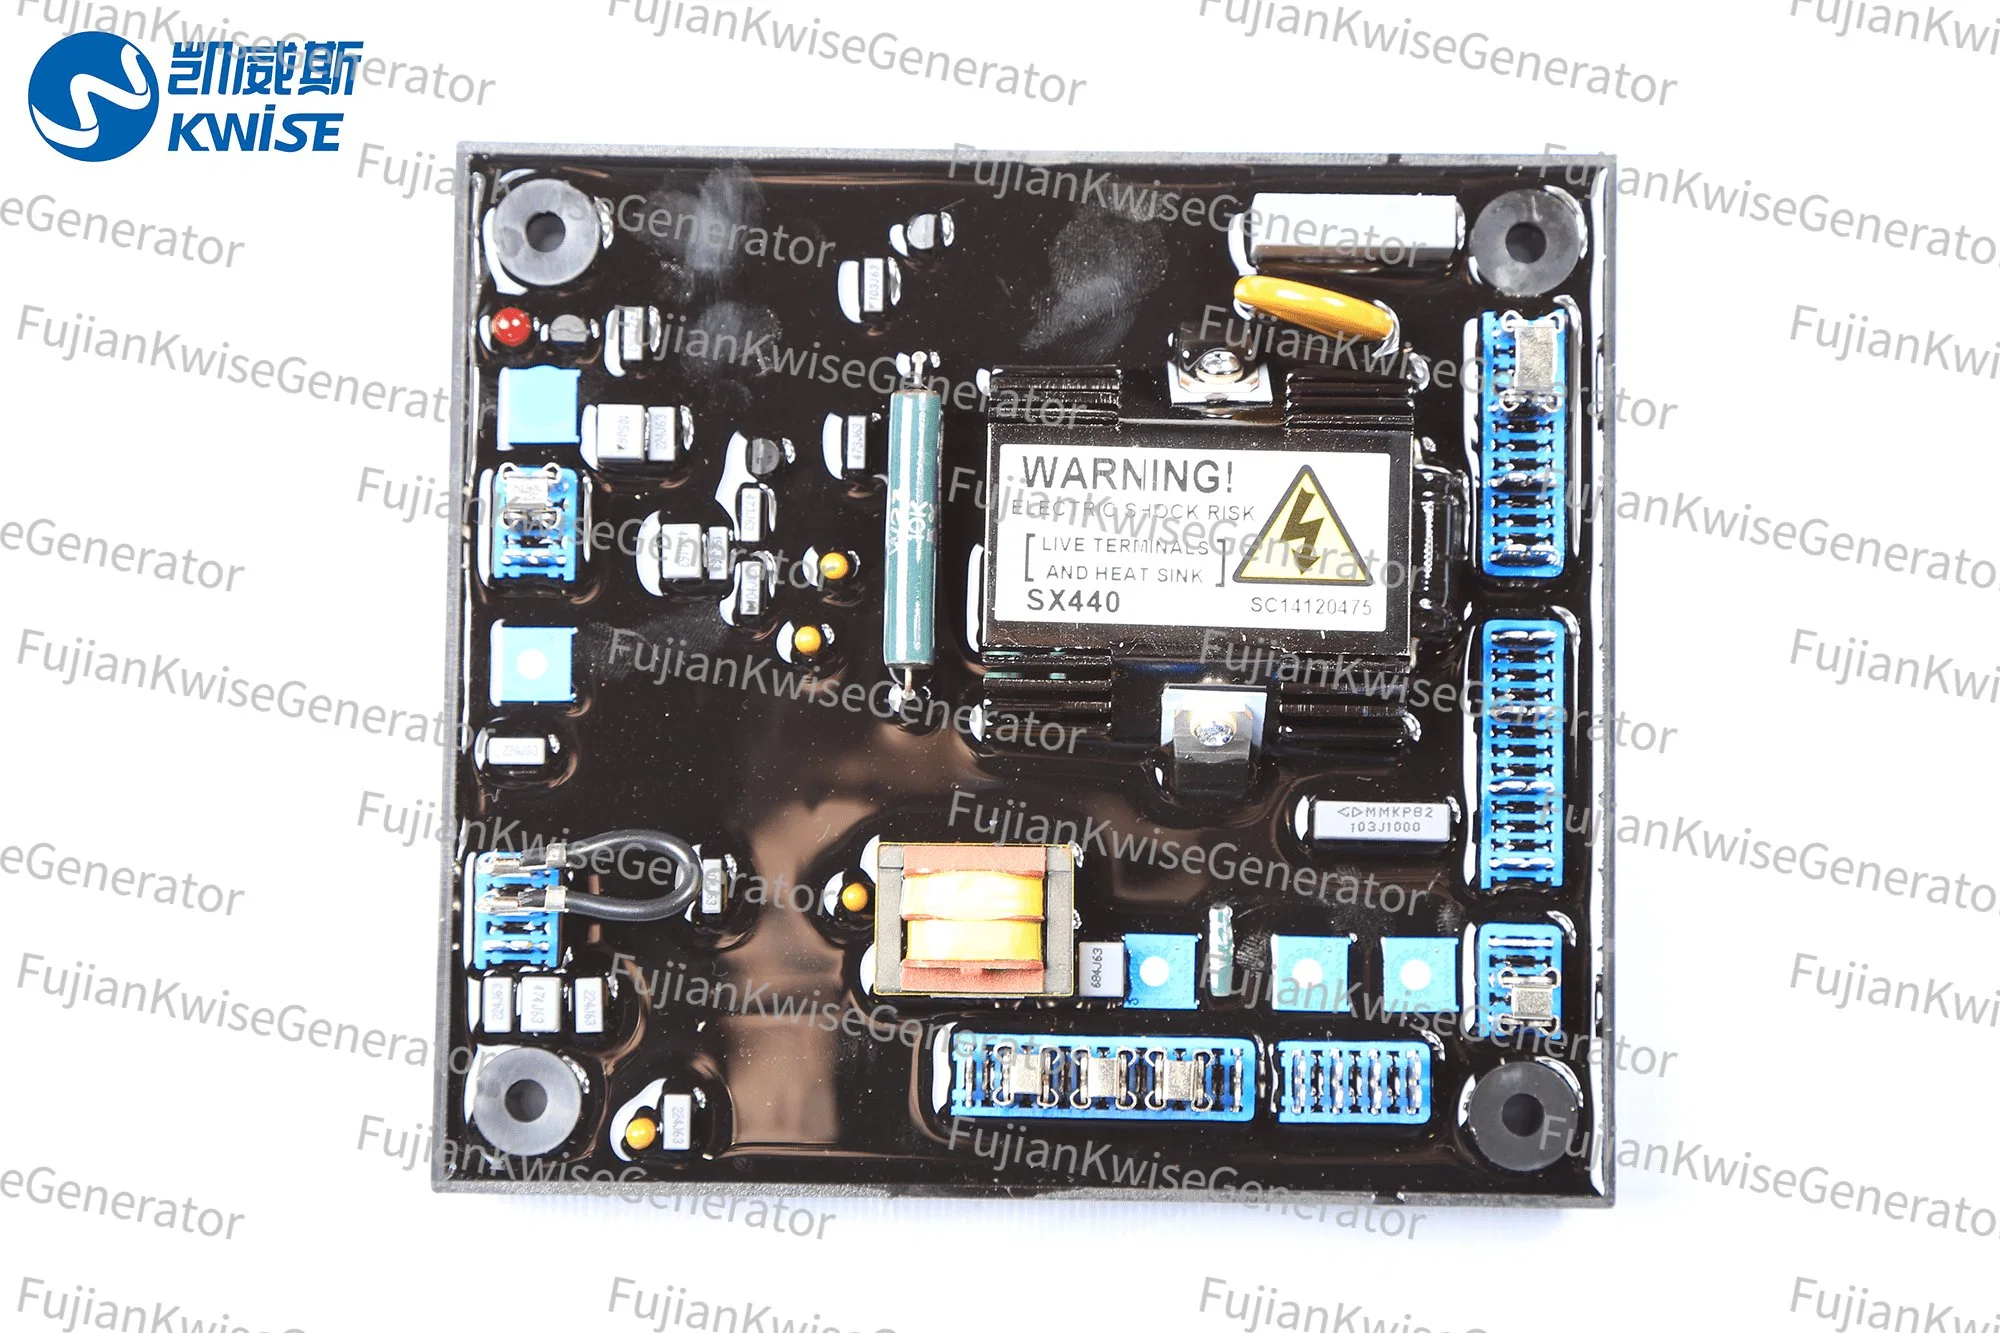 Kwise Ersatzteil Mx314b Digitaler automatischer Spannungsregler Auto AVR Gemäß ISO CE IEC-Normen